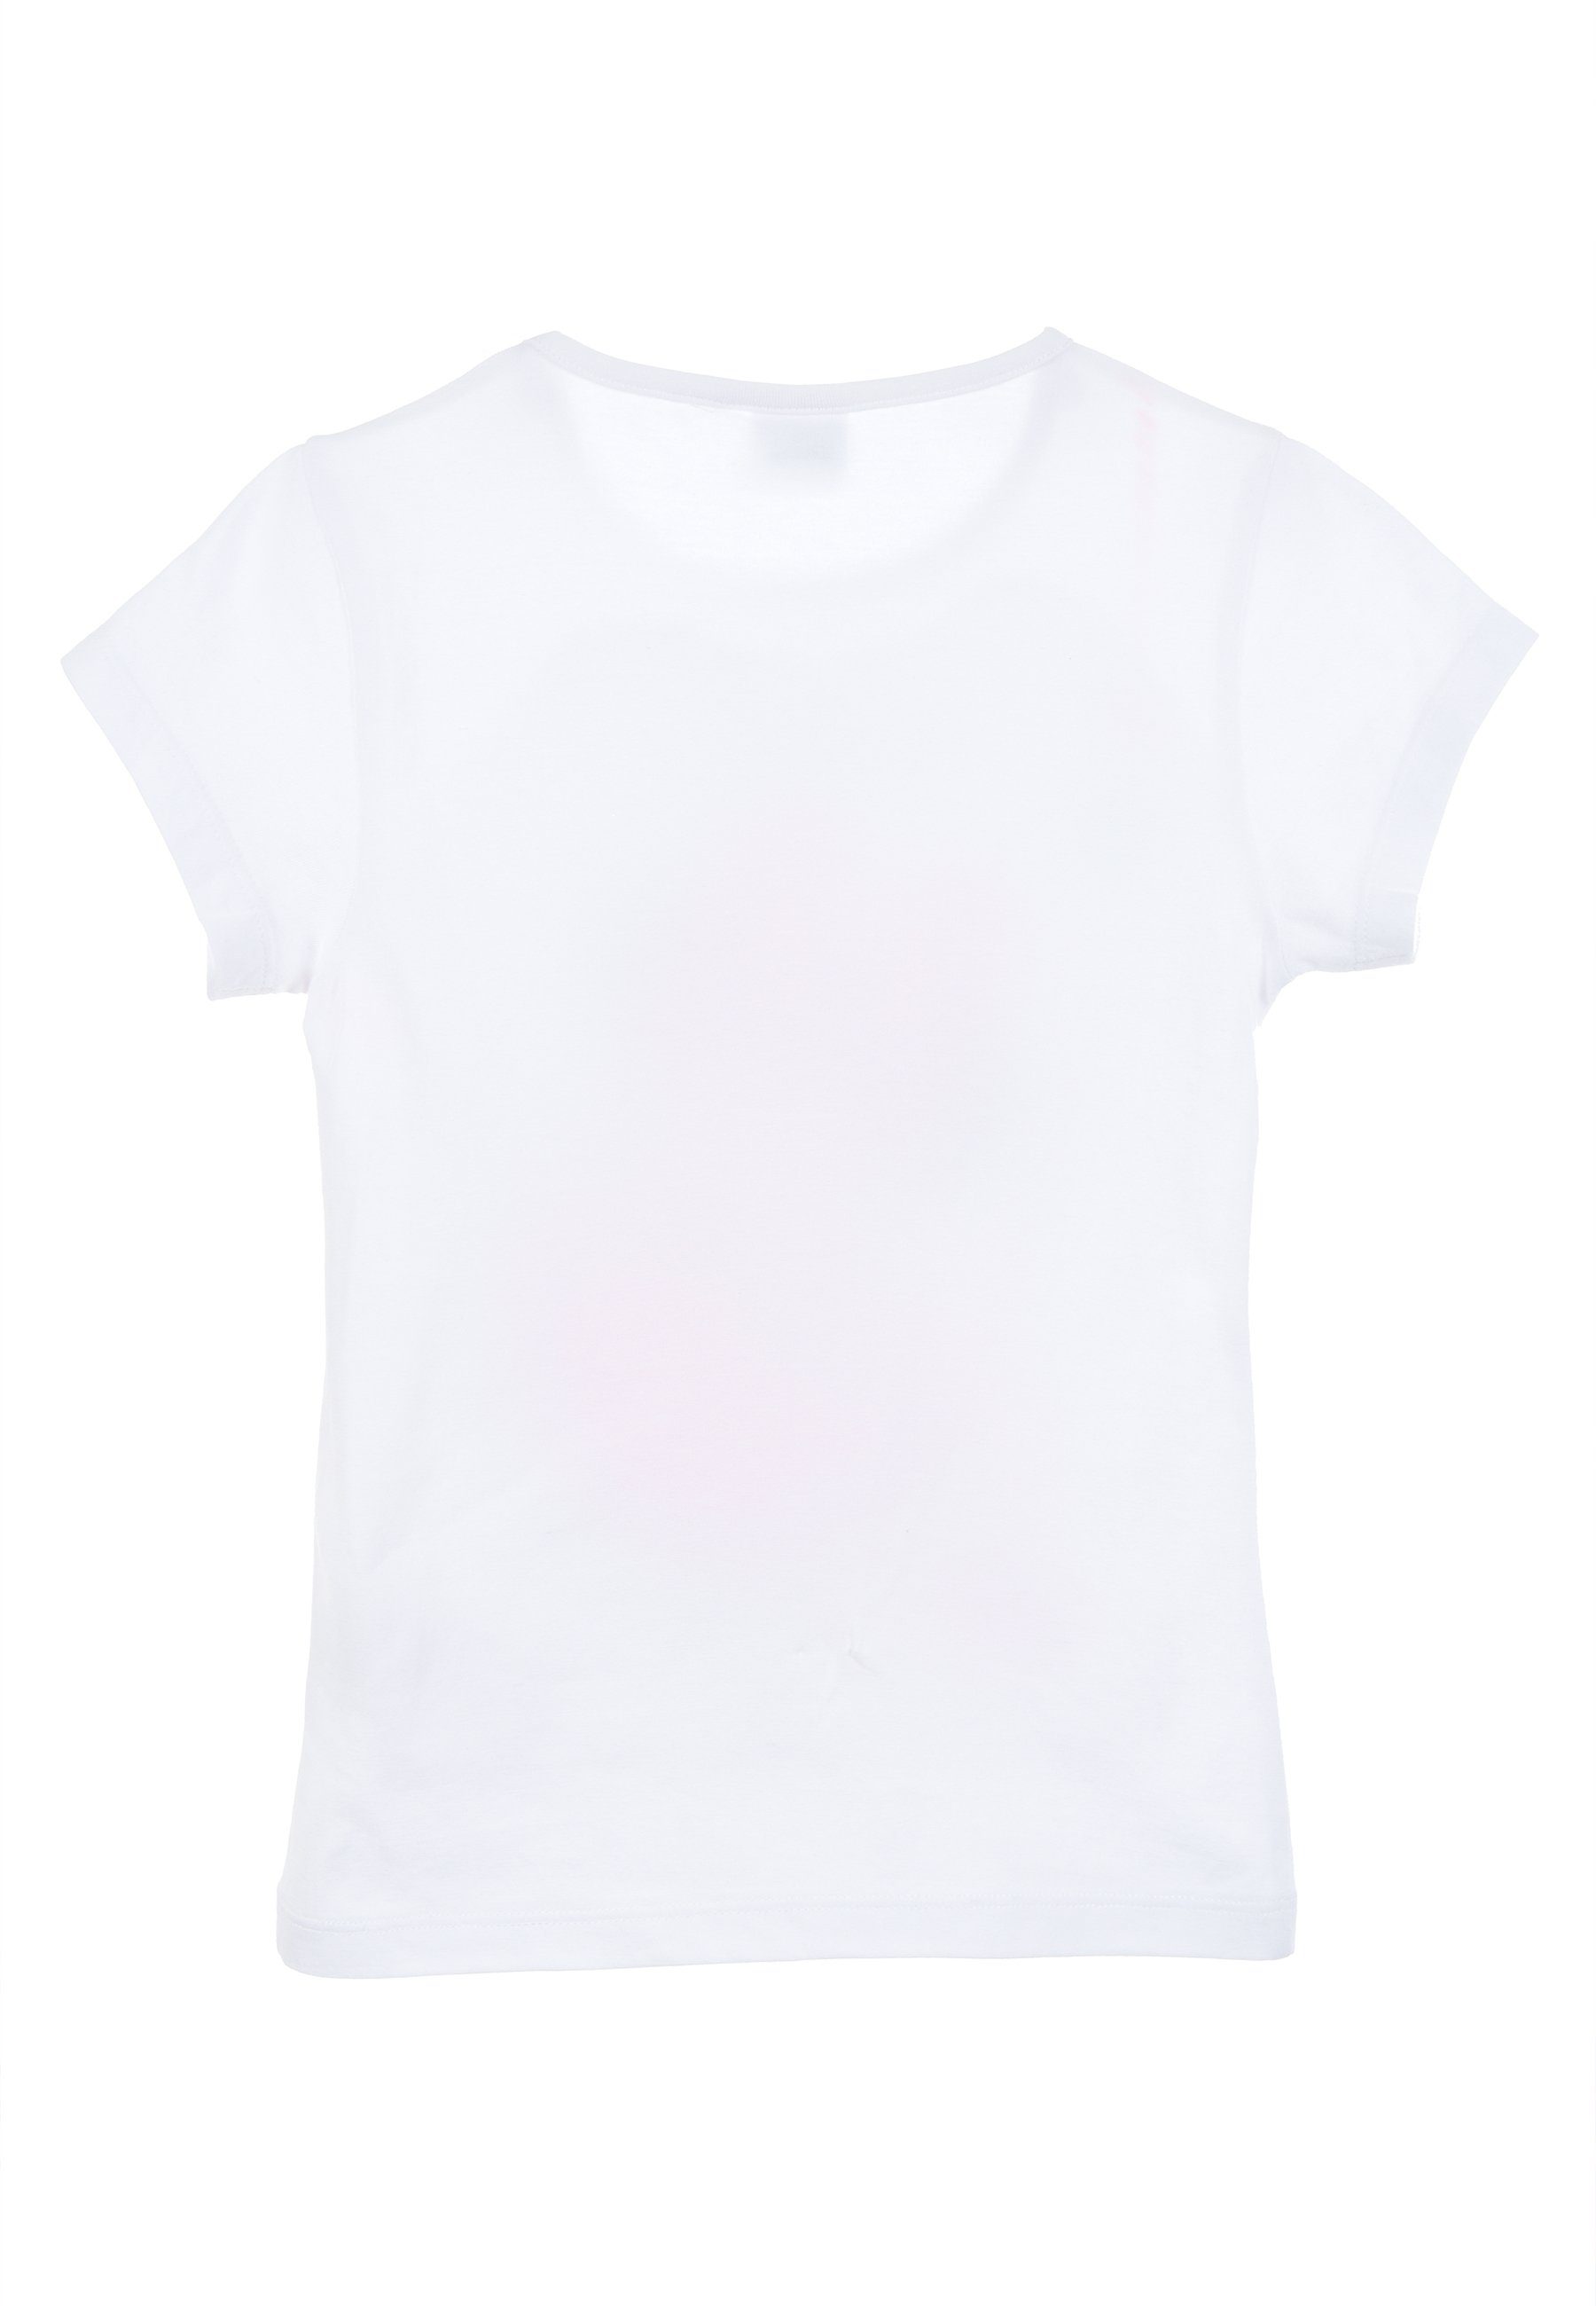 Disney Minnie Weiß Sommer Oberteil T-Shirt Kurzarm-Shirt Kinder Mädchen Mouse